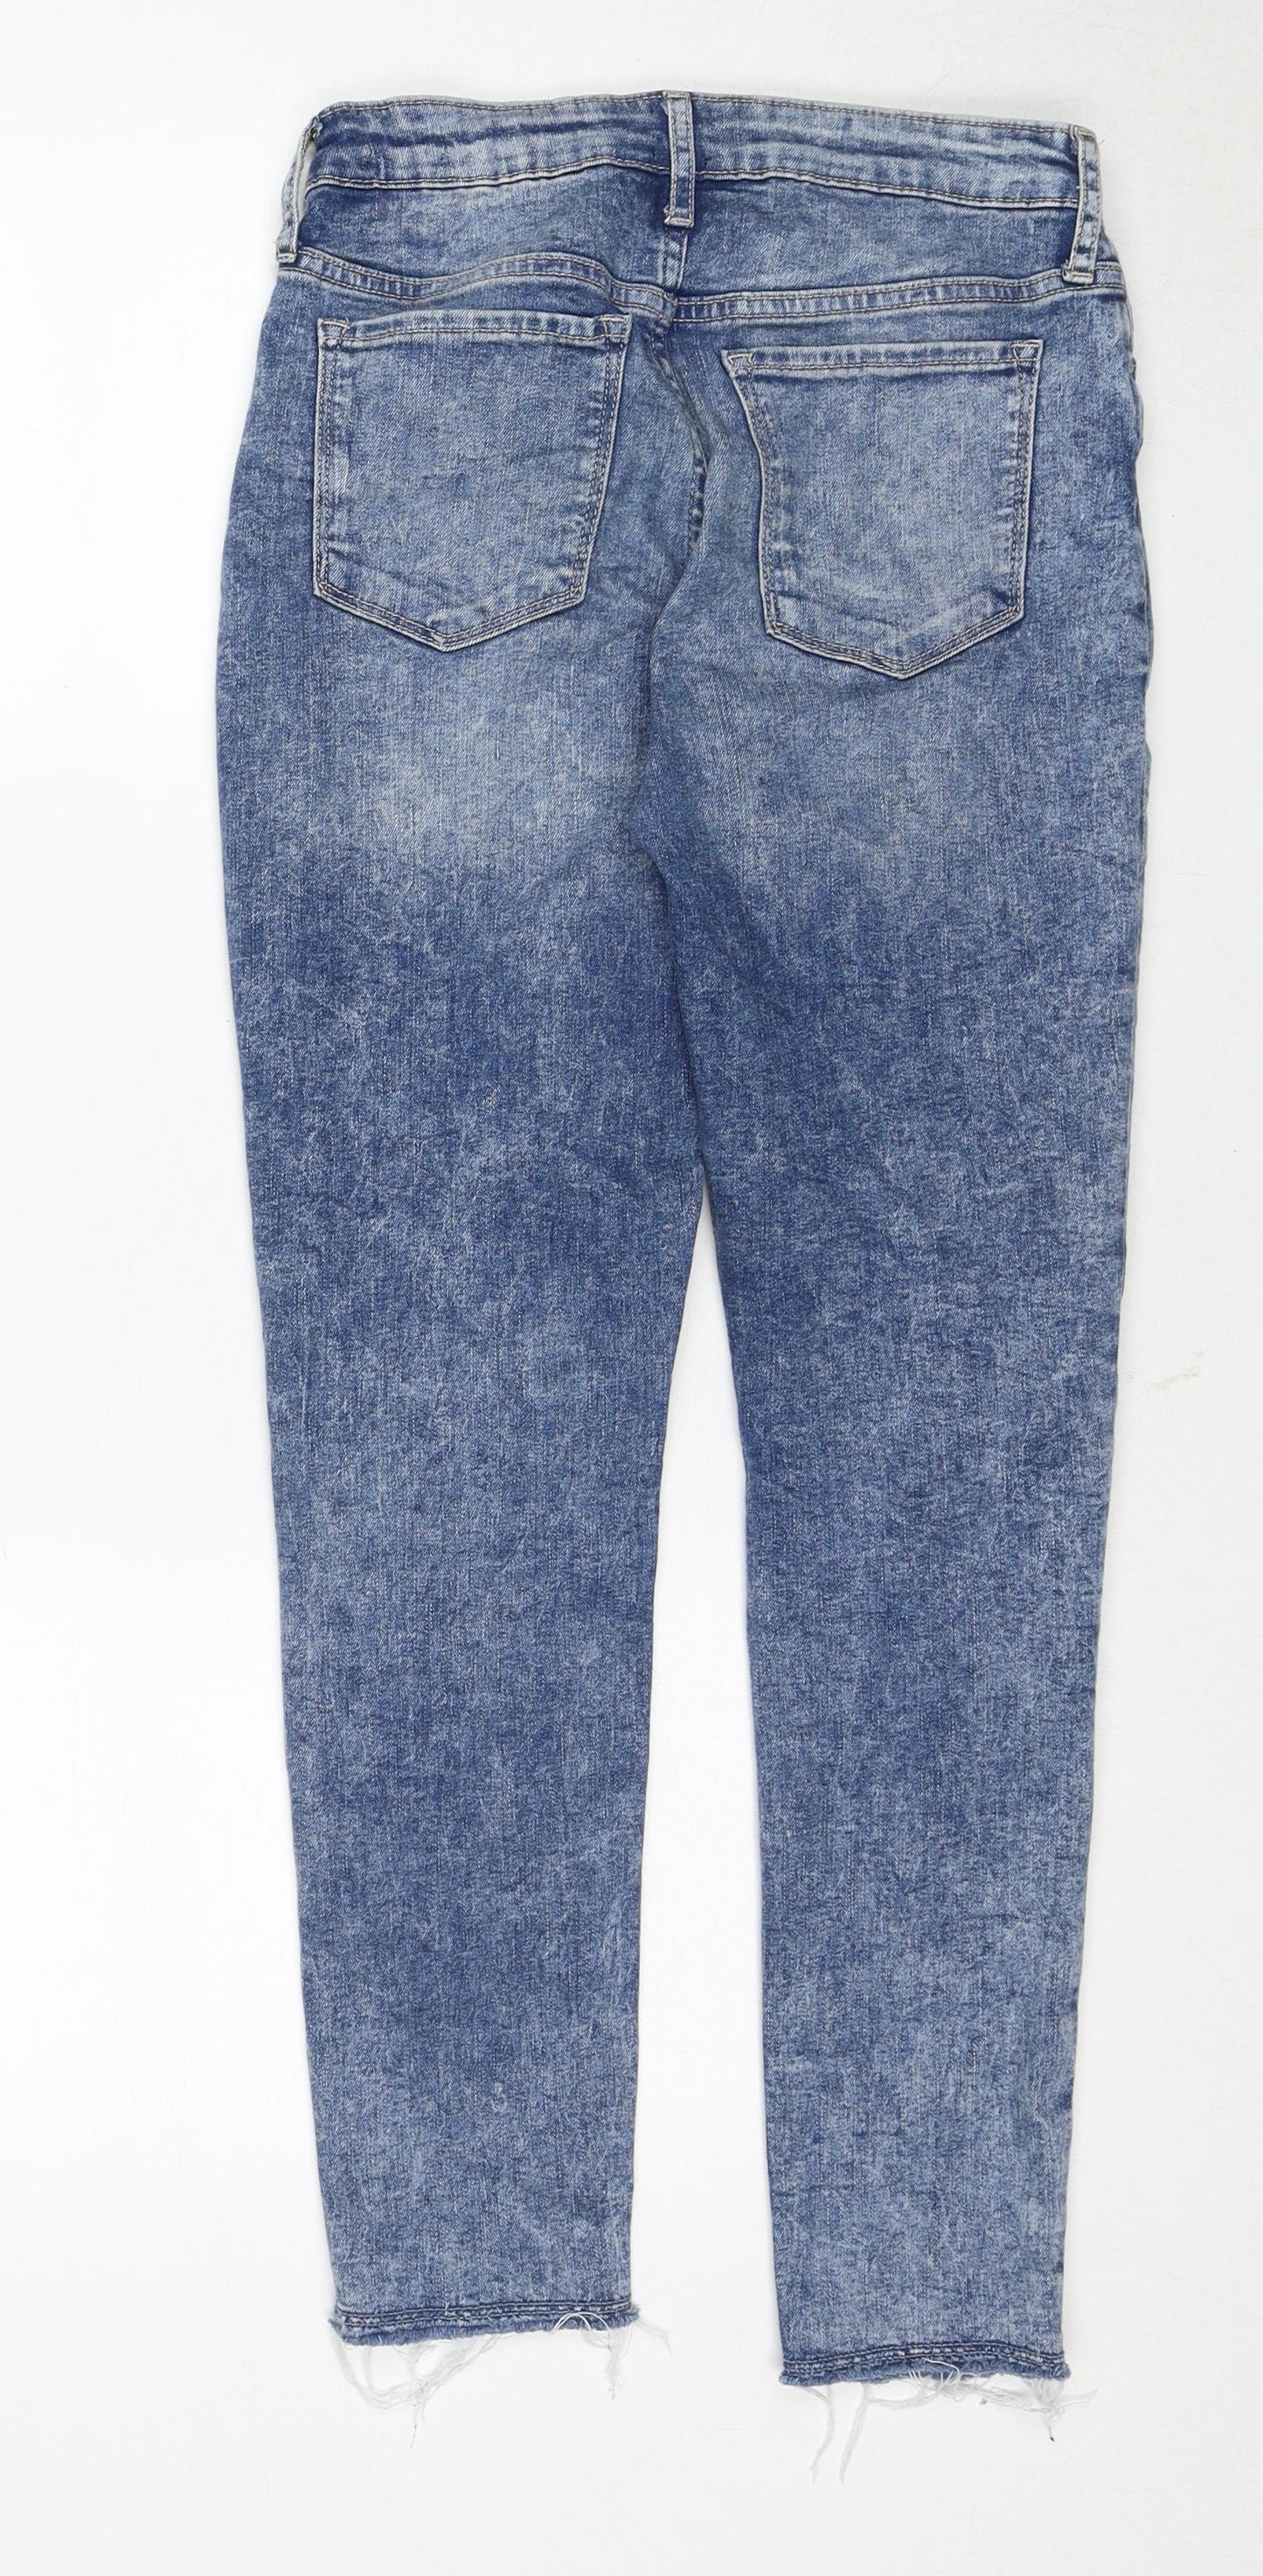 Gap Girls Blue Cotton Skinny Jeans Size 13-14 Years Regular Zip - Distressed